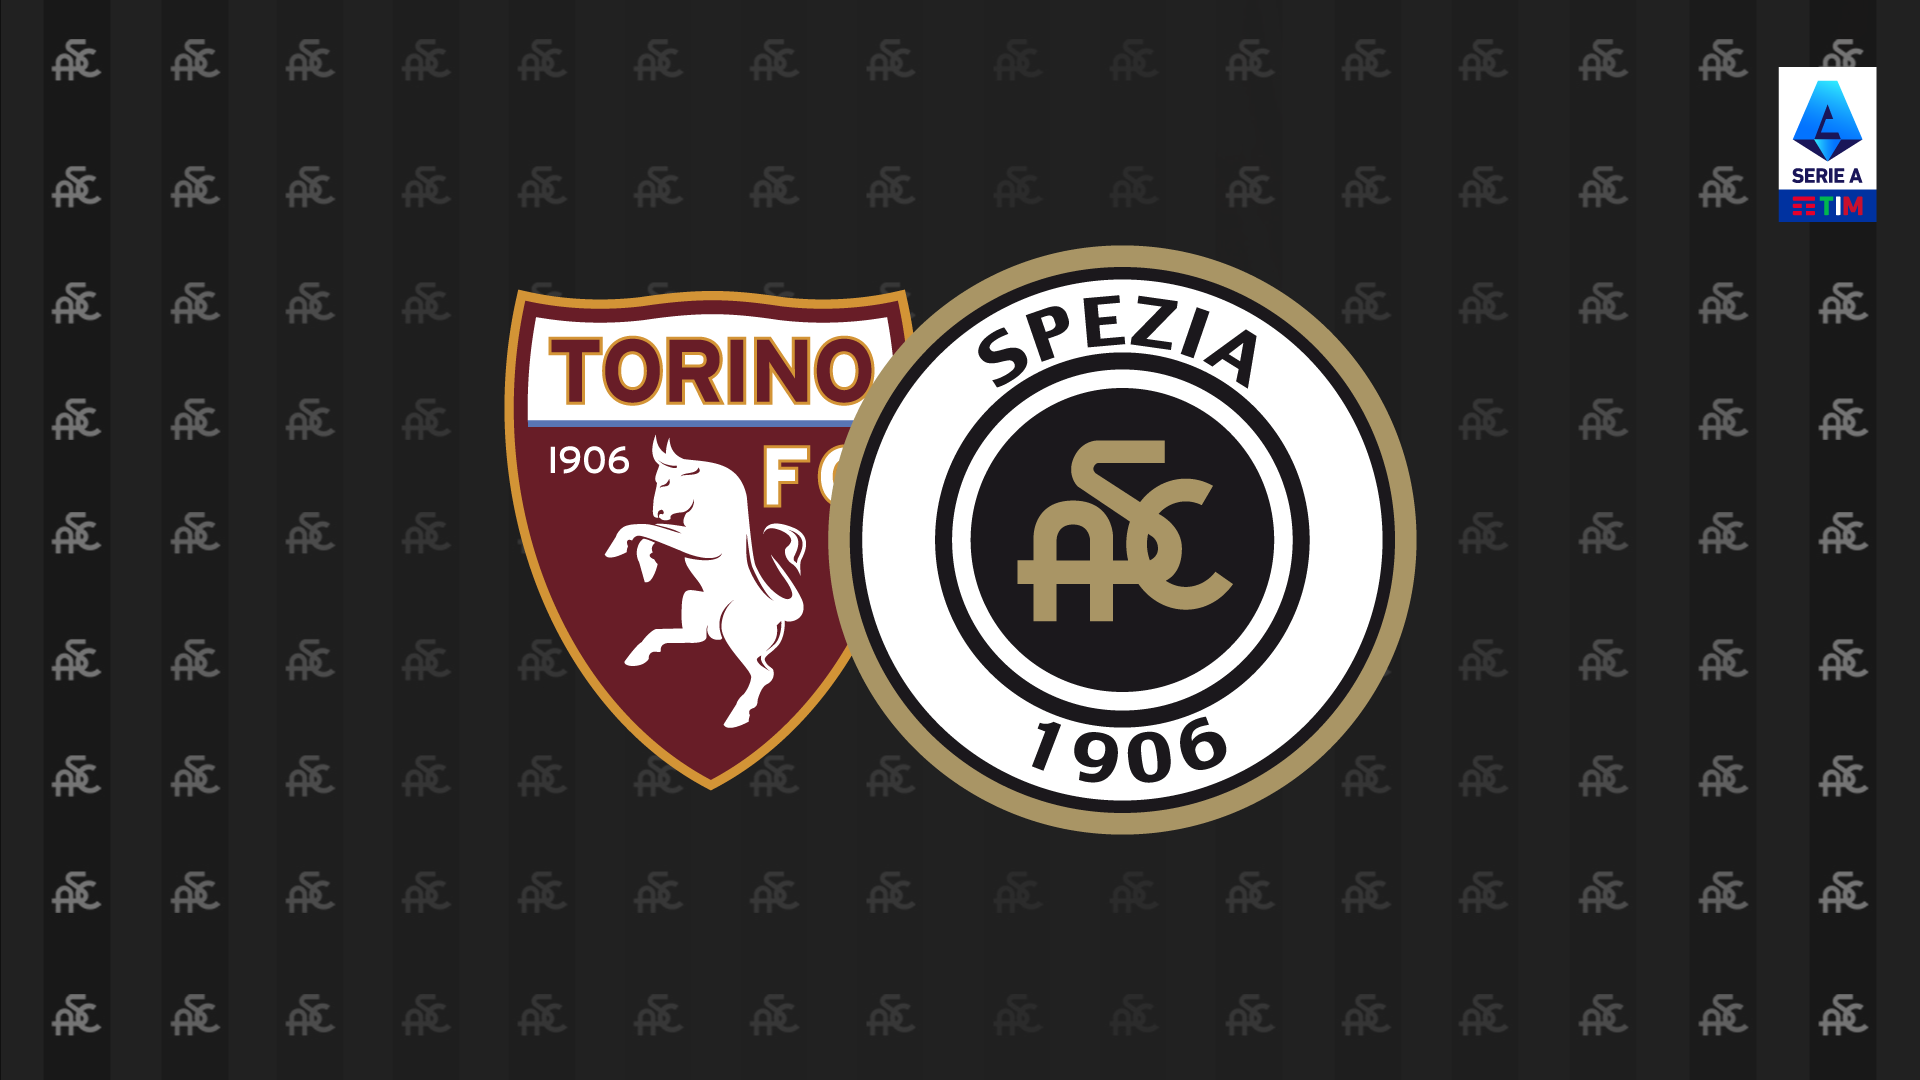 Serie A TIM 21/22: Torino-Spezia 2-1